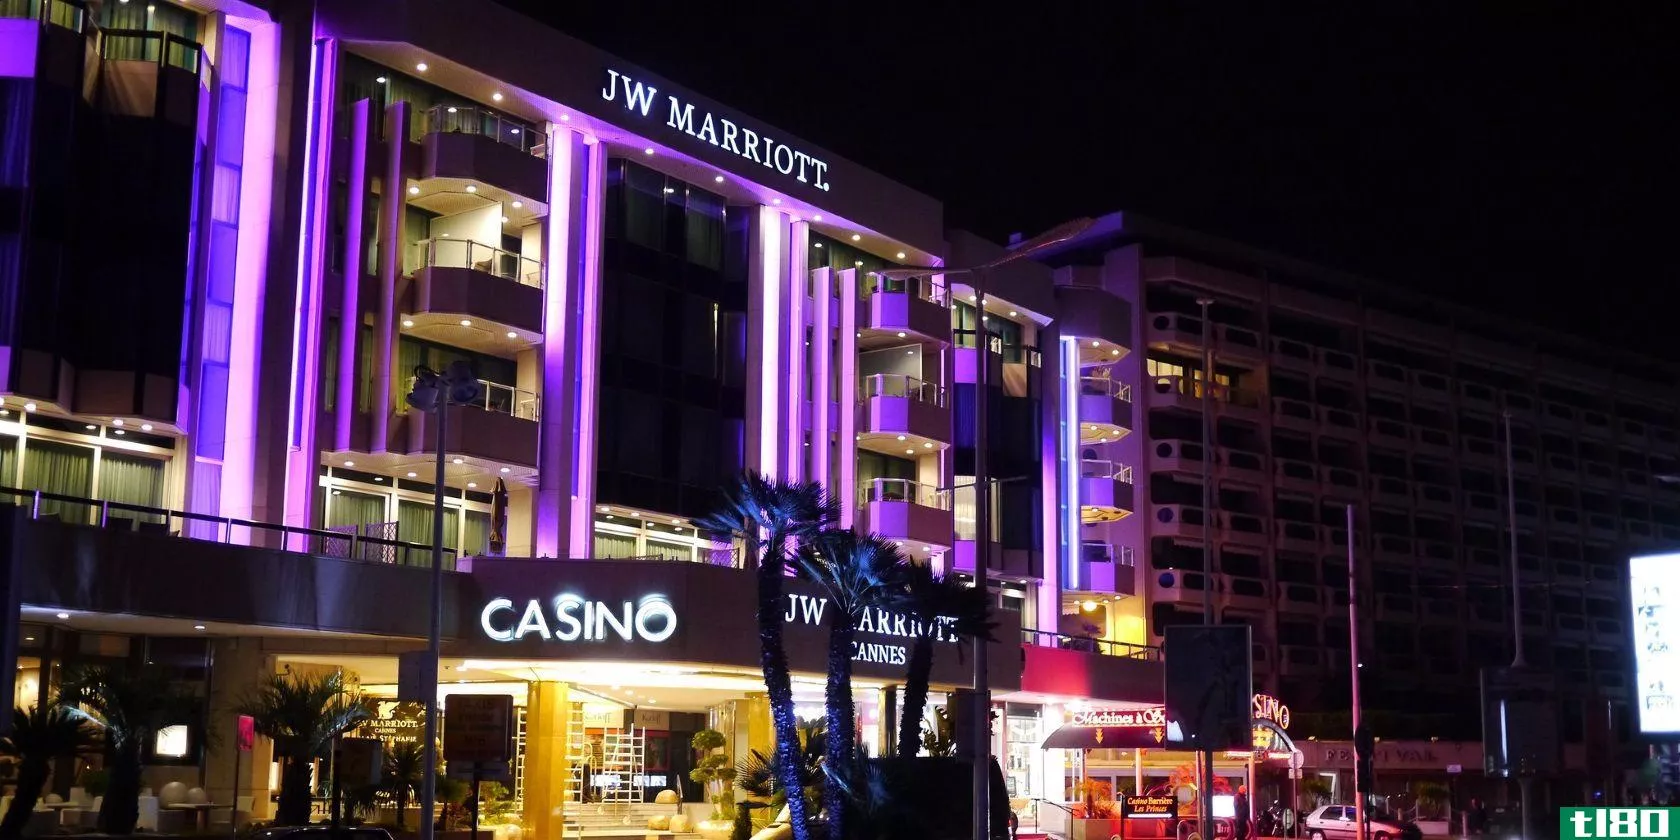 Marriott Hotels announced a security breach in November 2018